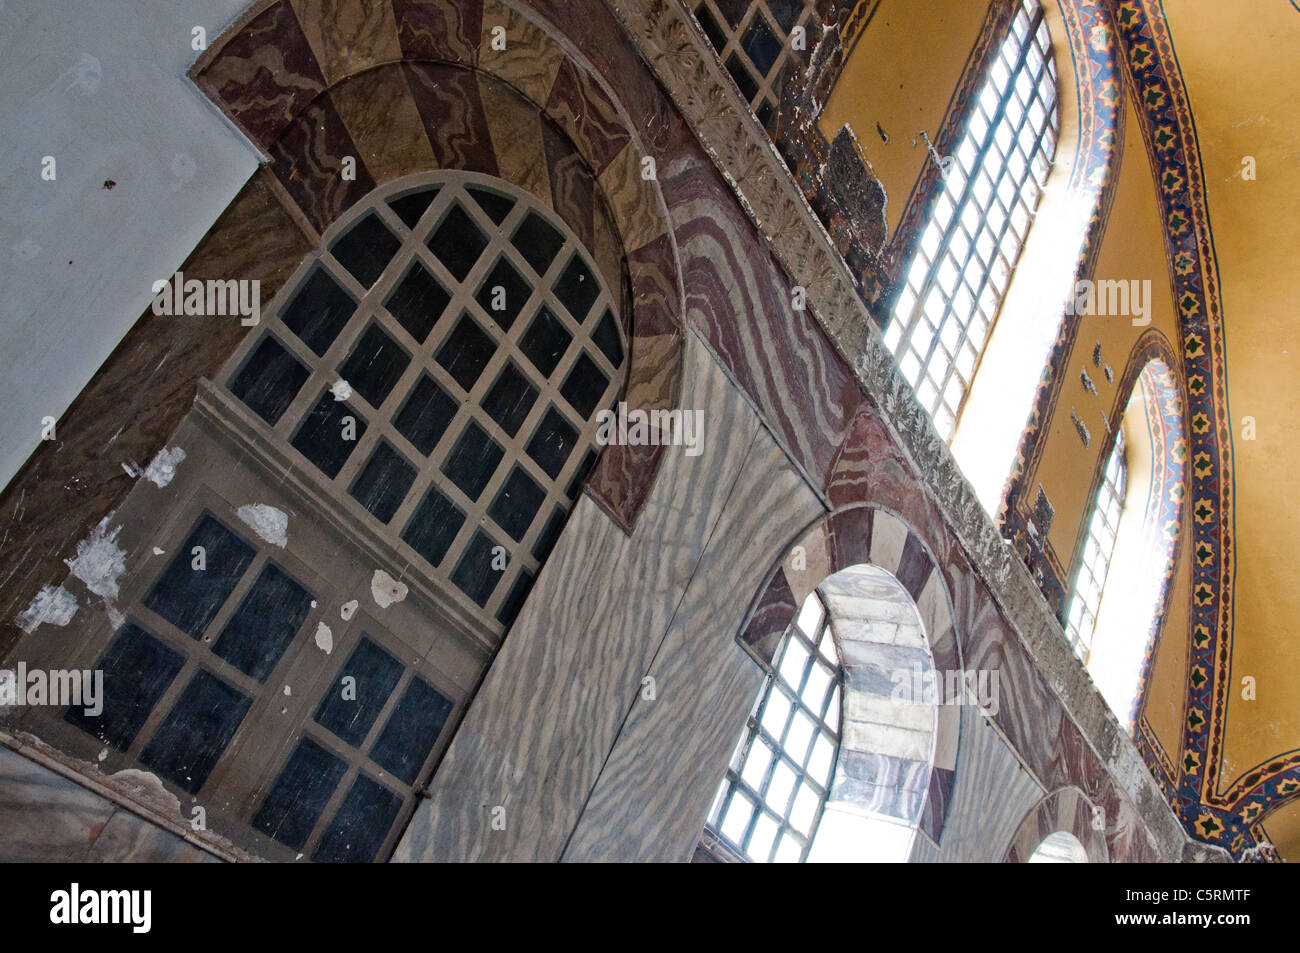 False window and real window, Ayasofya (Hagia Sophia) cathedral and mosque, Istanbul, Turkey Stock Photo